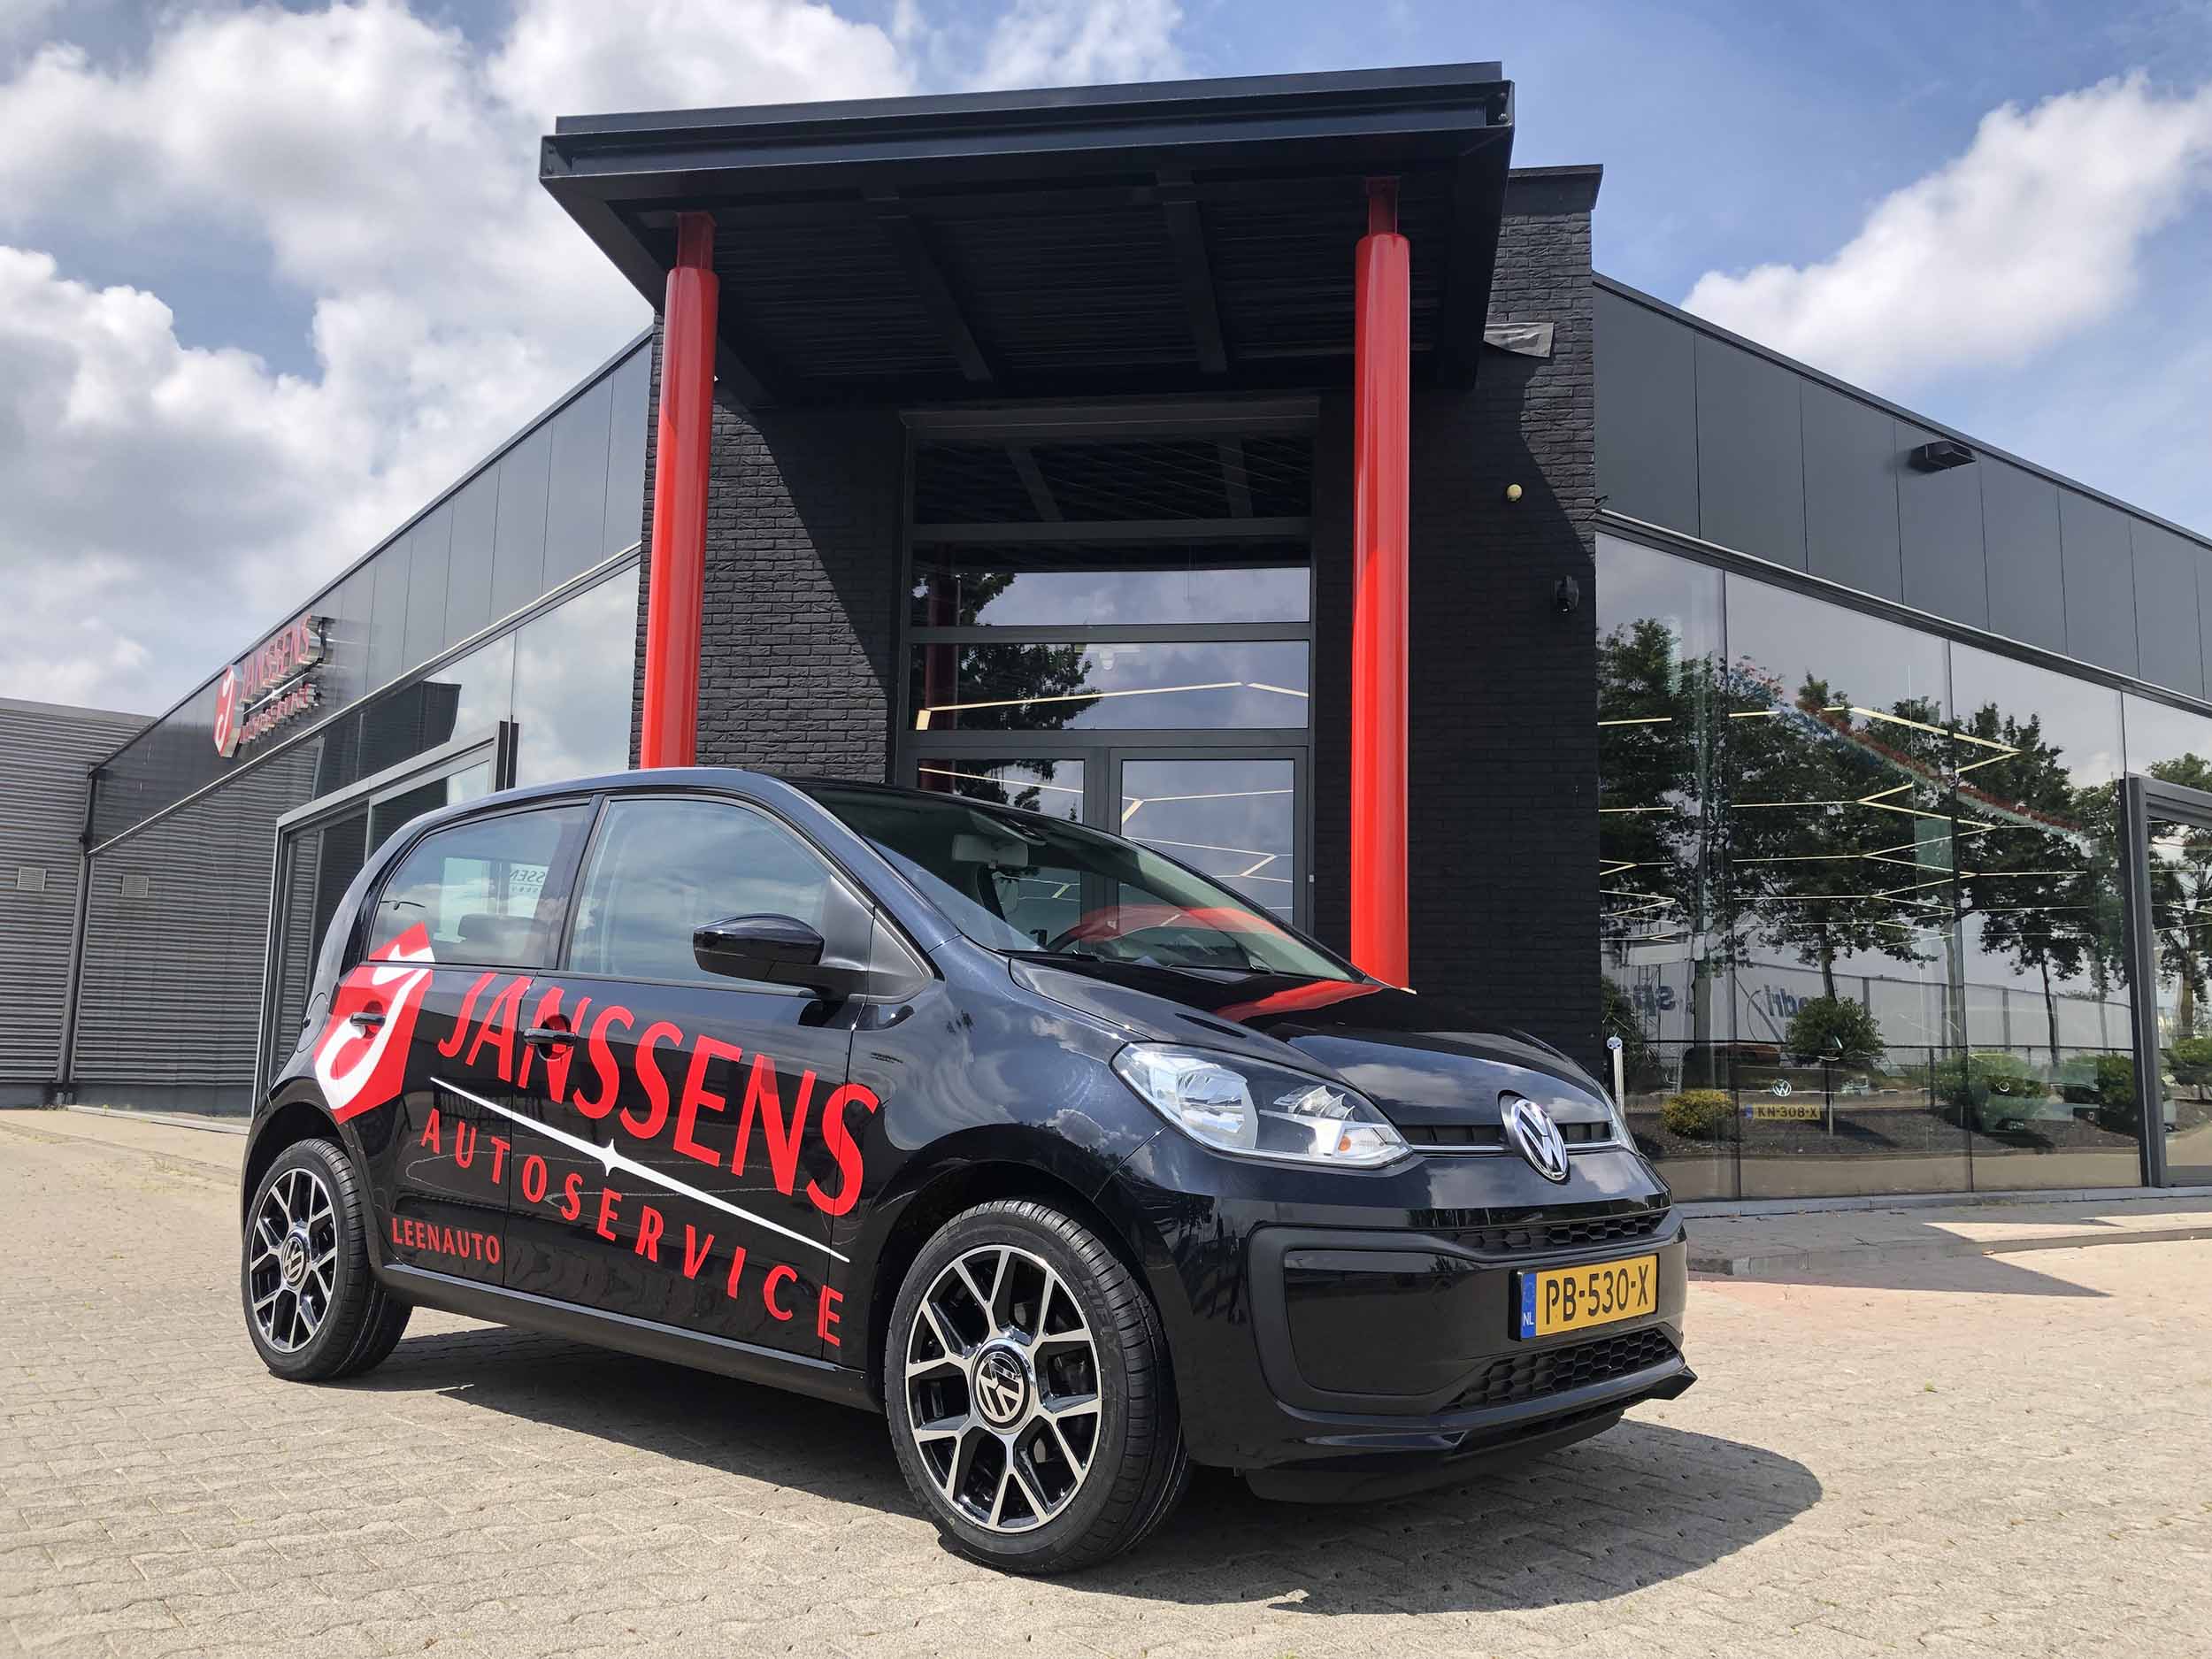 Autobelettering Janssens Autoservice Venlo